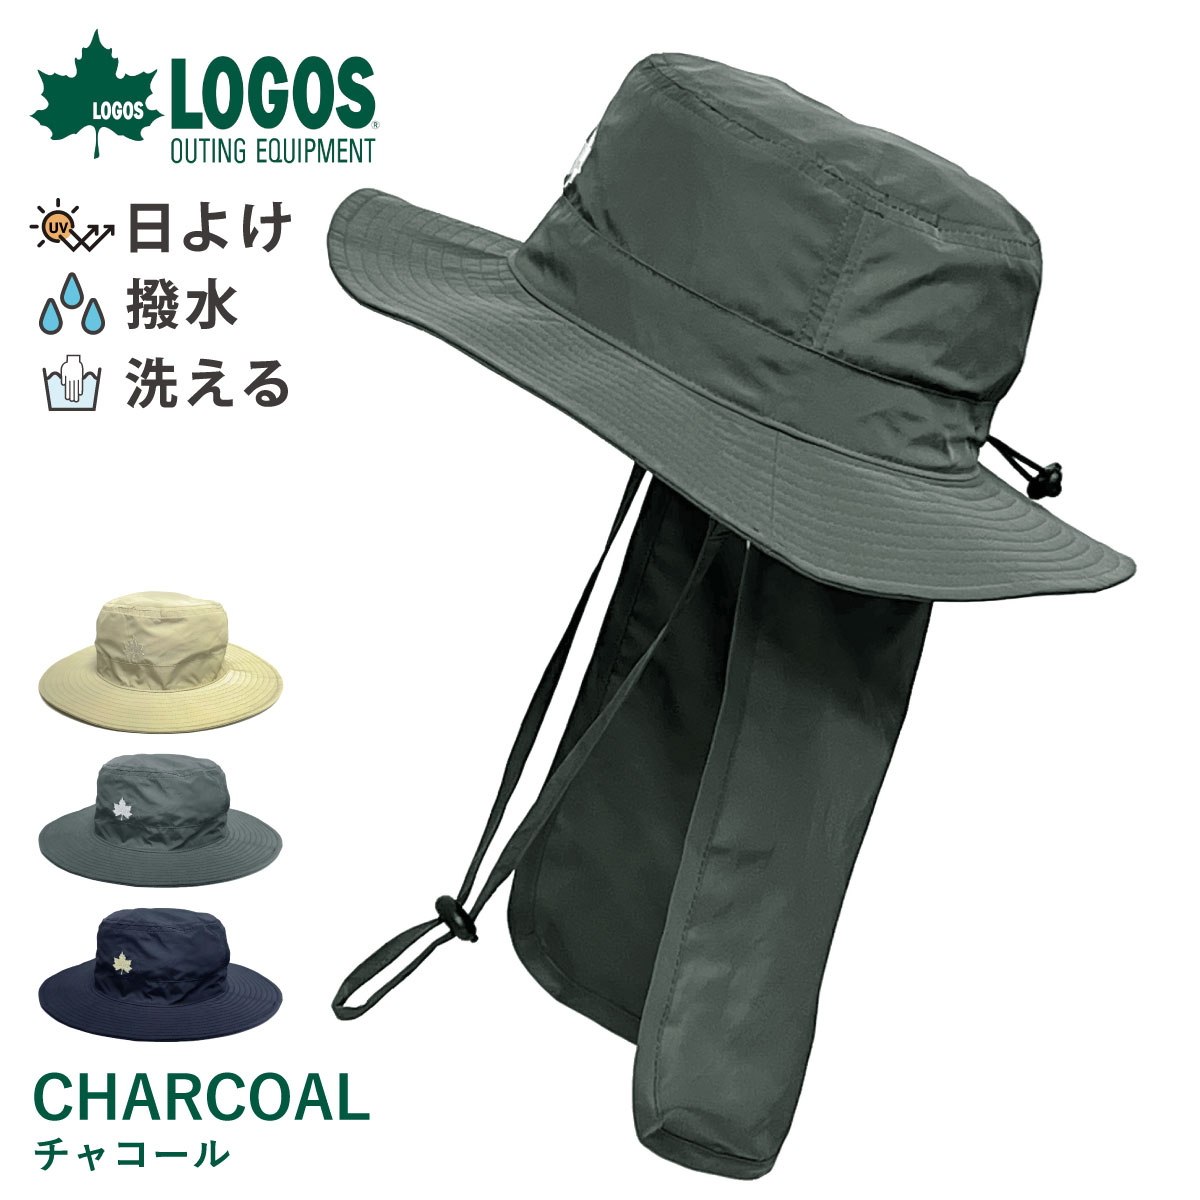 LOGOS 撥水サファリハット 帽子 シェード 超軽量 アドベンチャーハット 58cm hat-15...